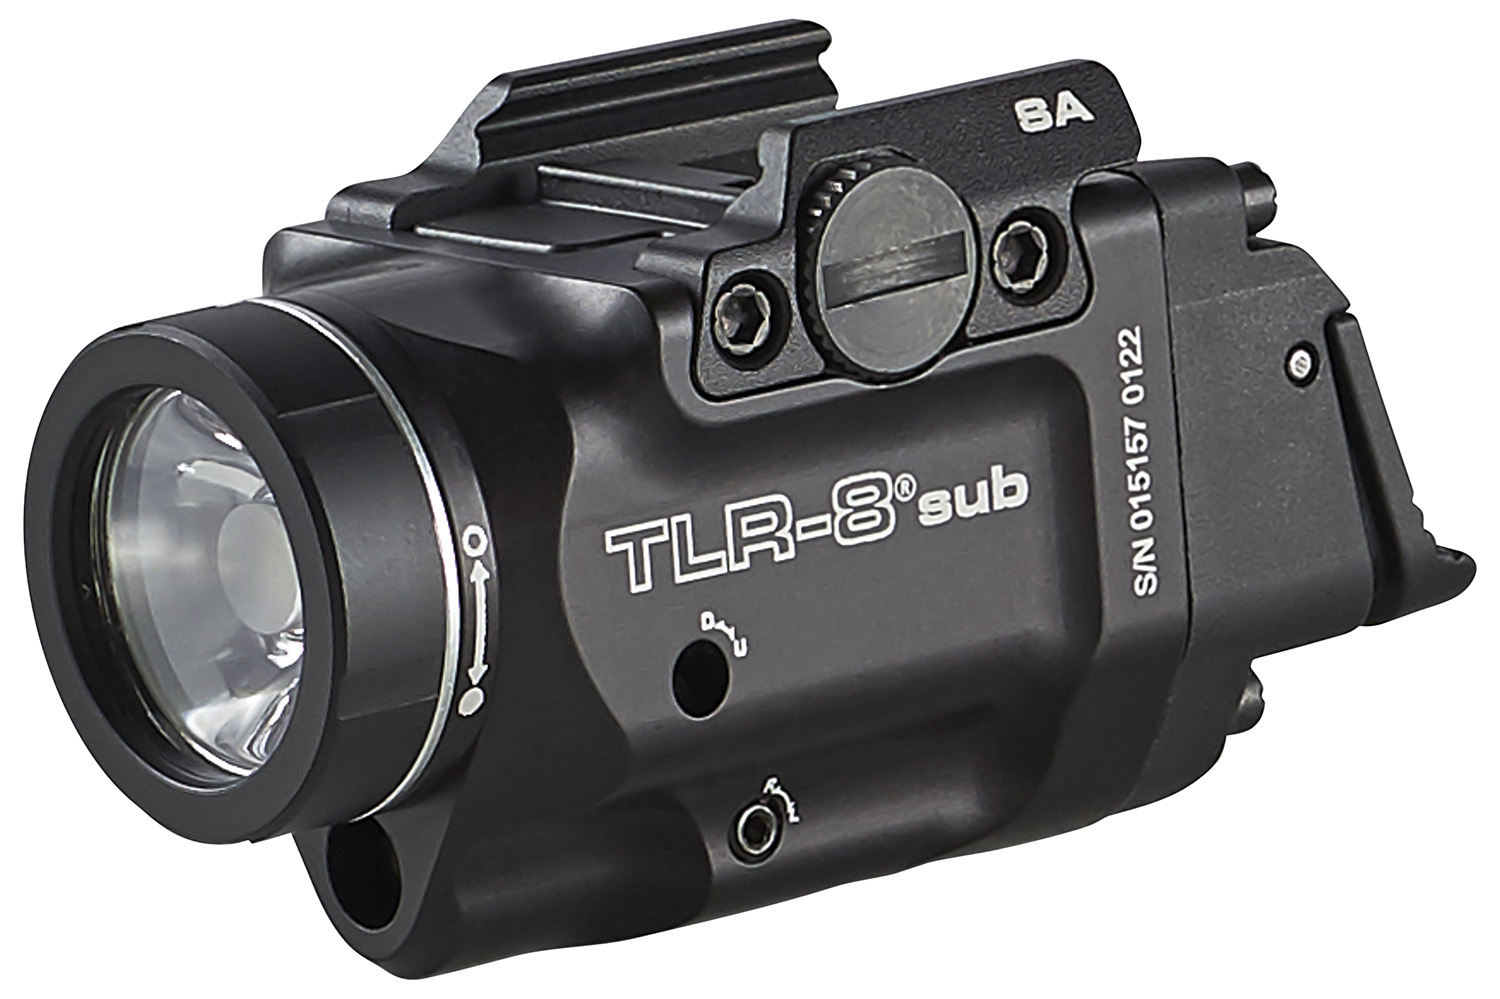 Streamlight 69419 TLR-8 Sub W/Laser Red Laser 500 Lumens 640-660Nm Wavelength, Black 141 Meters Beam Distance, Fits Spri